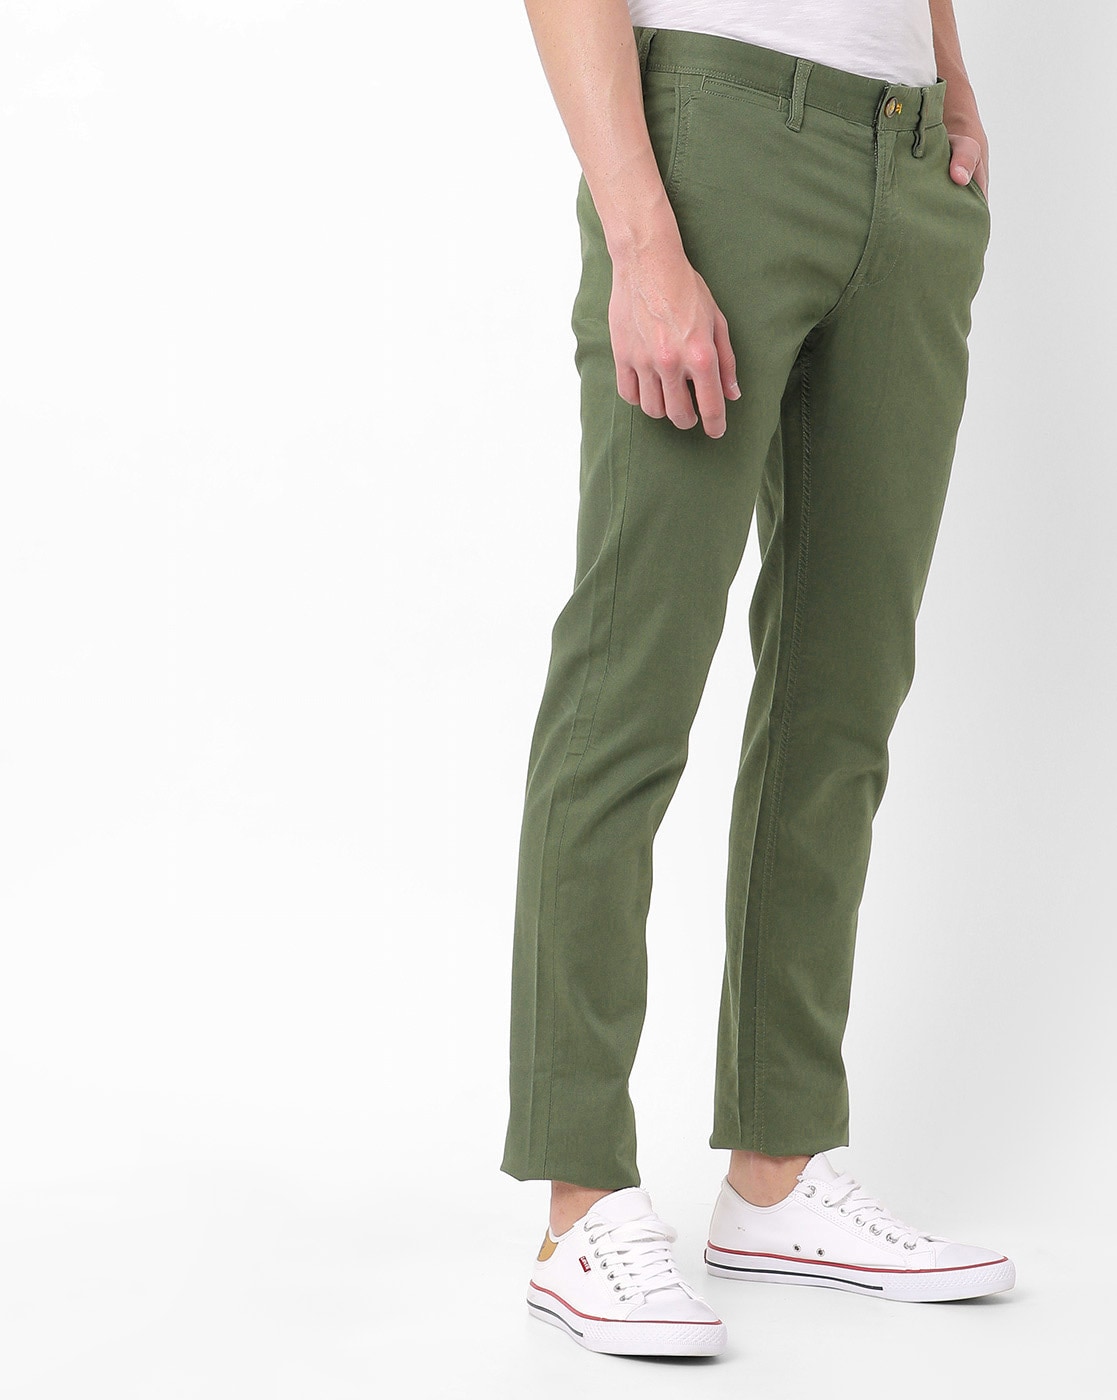 Buy Olive Green Trousers  Pants for Men by INDIAN TERRAIN Online  Ajiocom